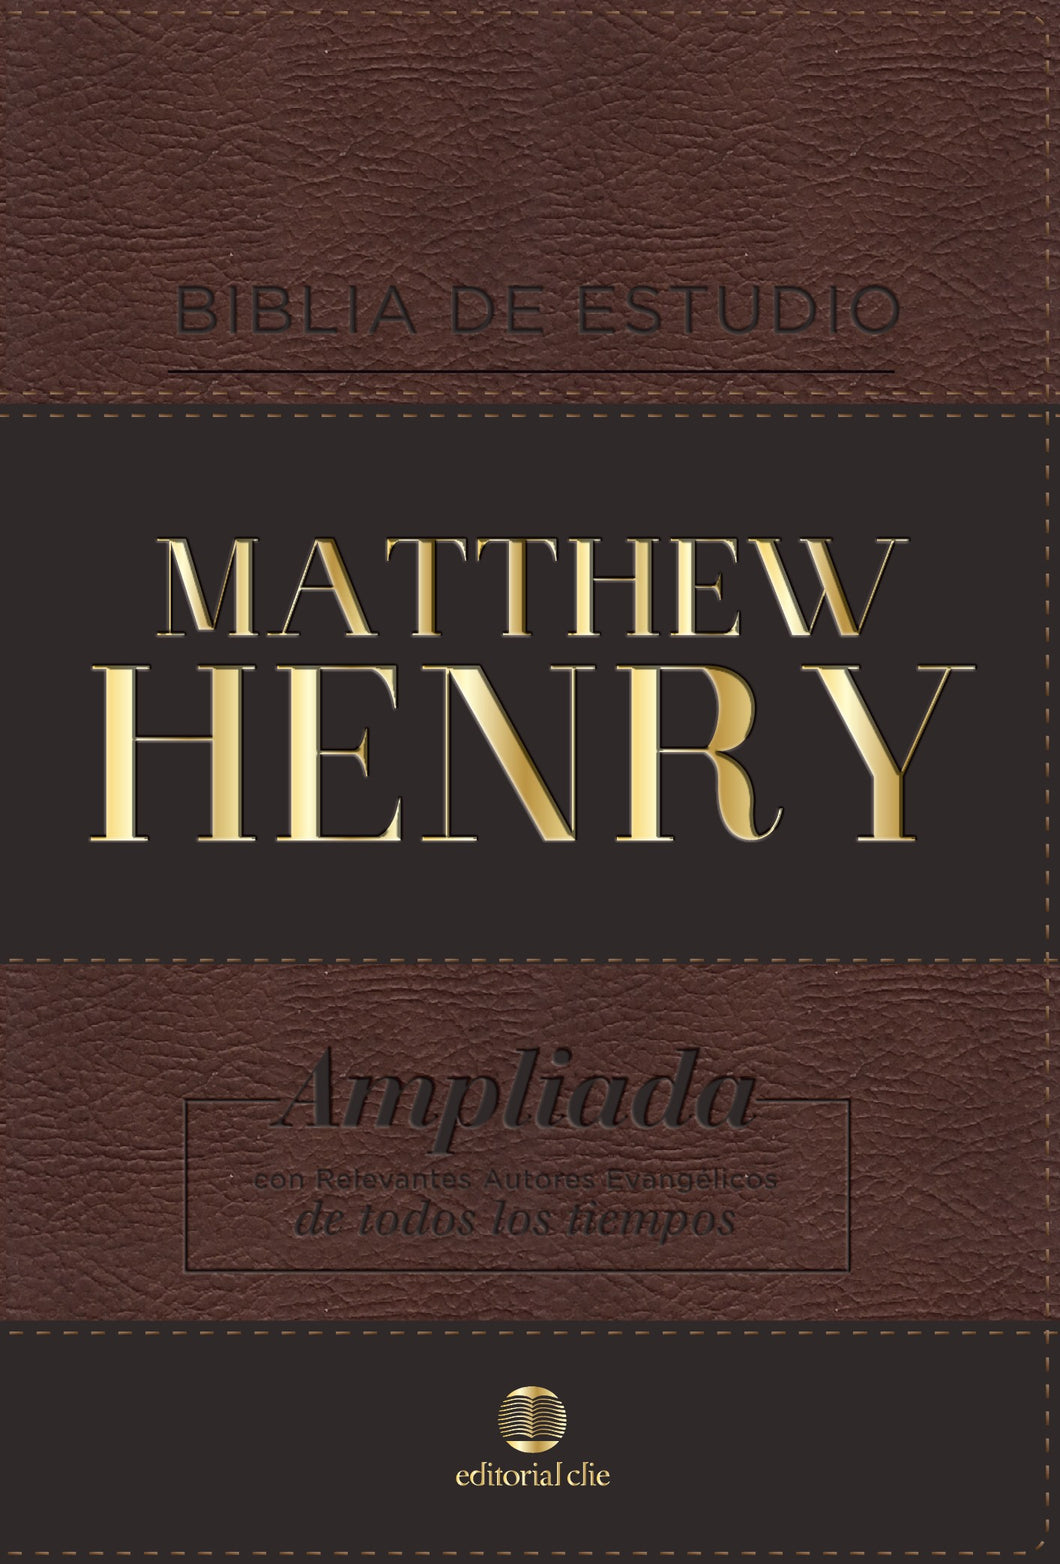 BIBLIA DE ESTUDIO MATTHEW HENRY (LEATHERSOFT CLÁSICA/ SIN ÍNDICE)